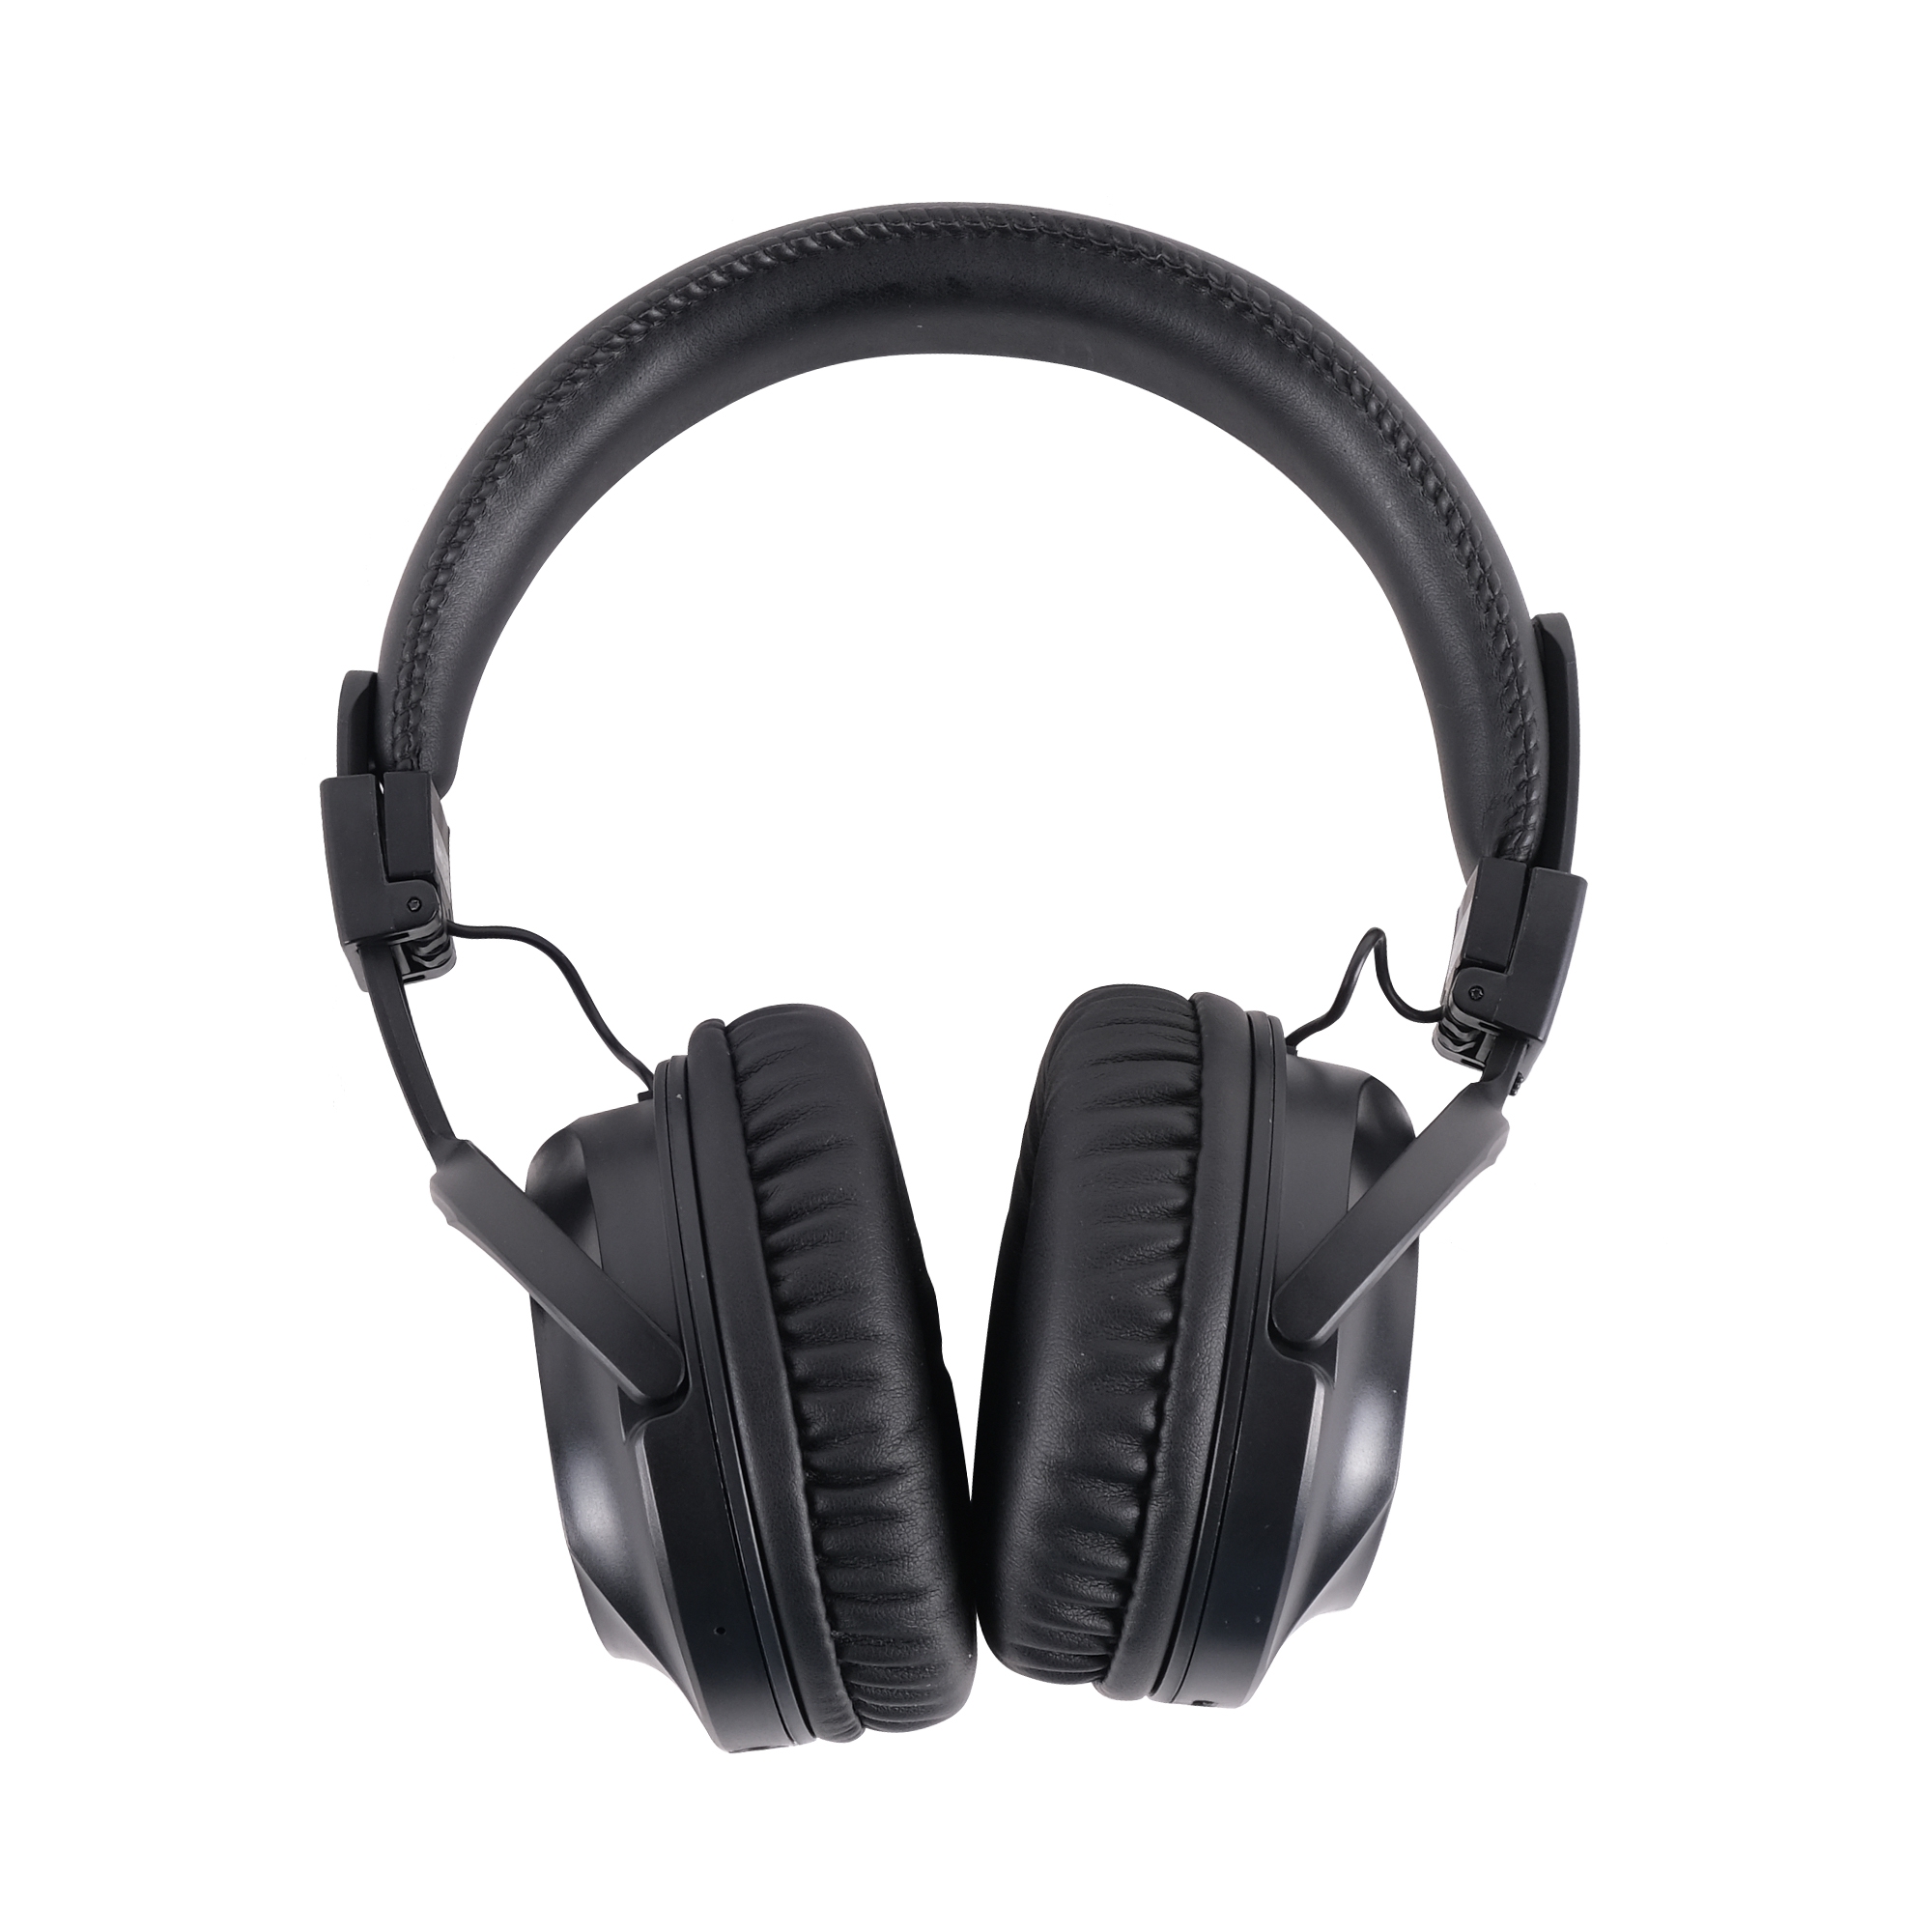 Fenix FH-101 Bluetooth Kulaküstü Kulaklık